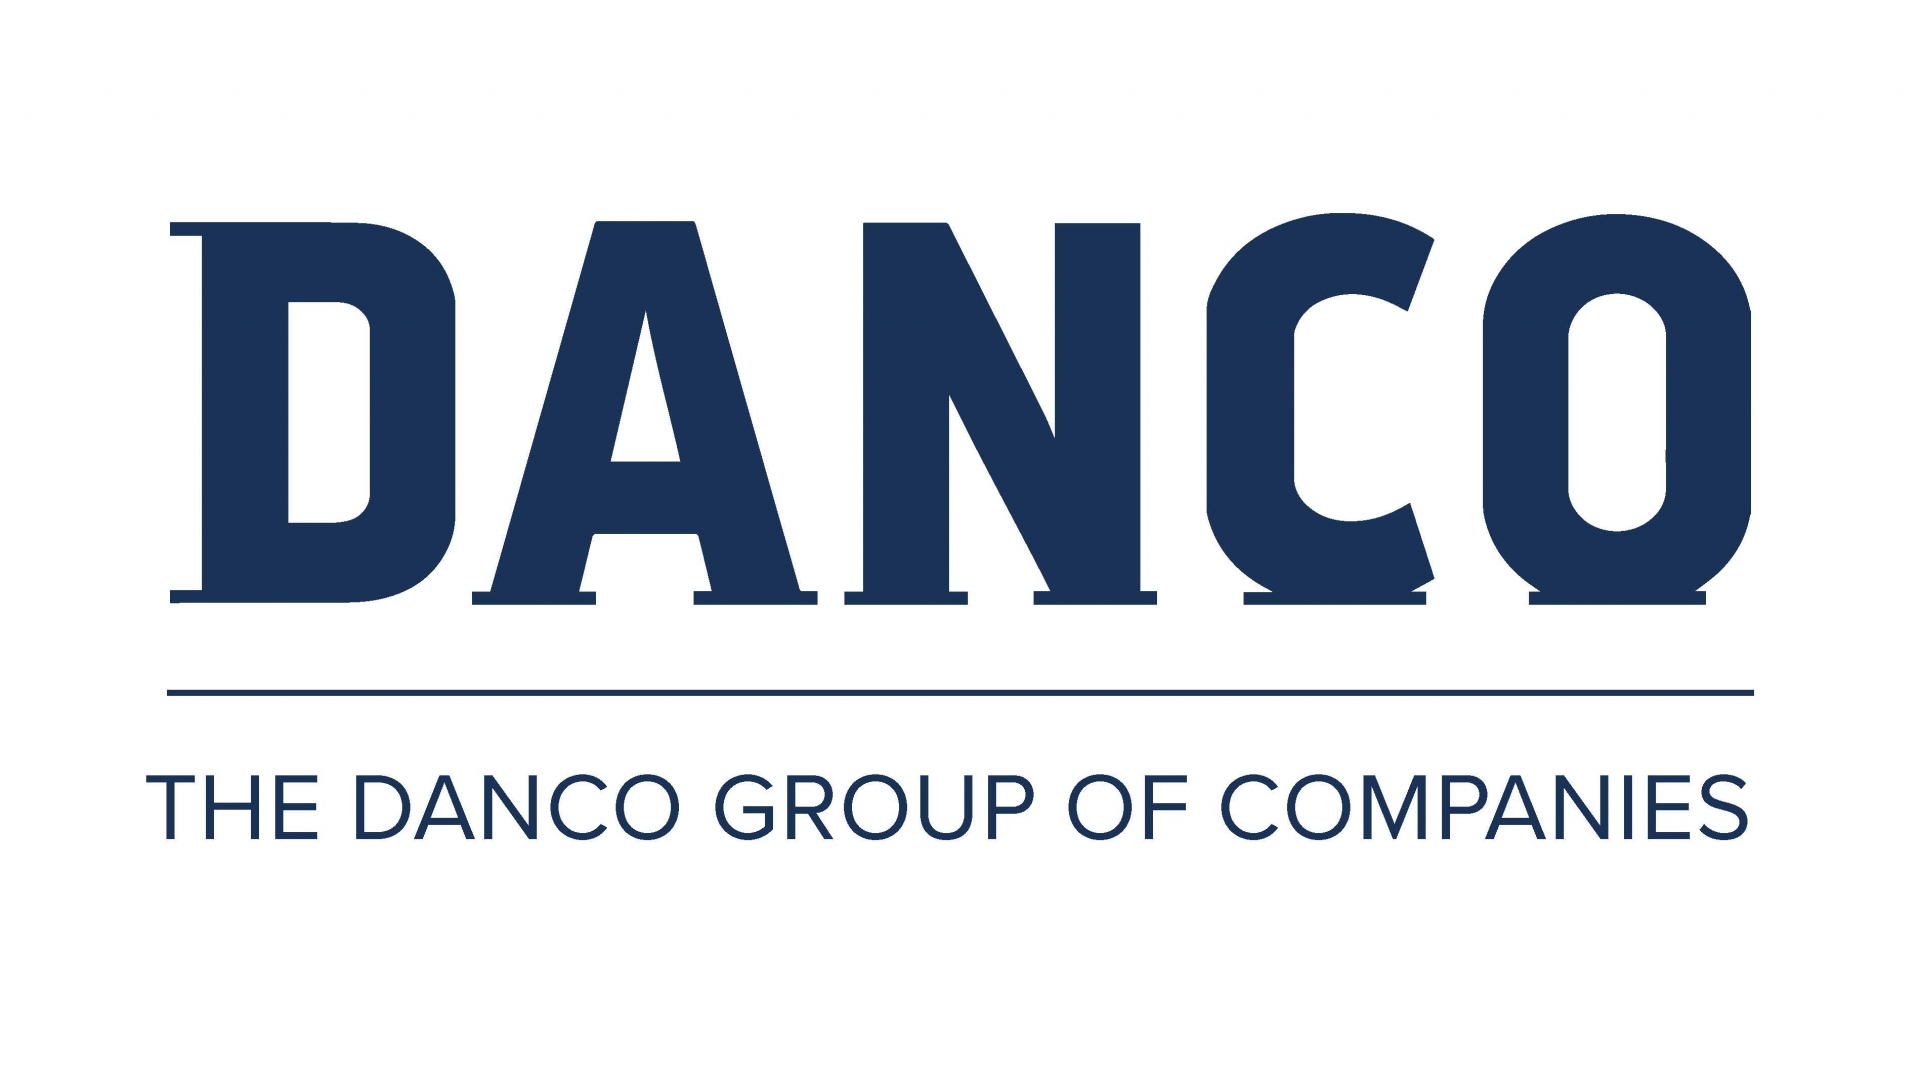 The Danco Group logo